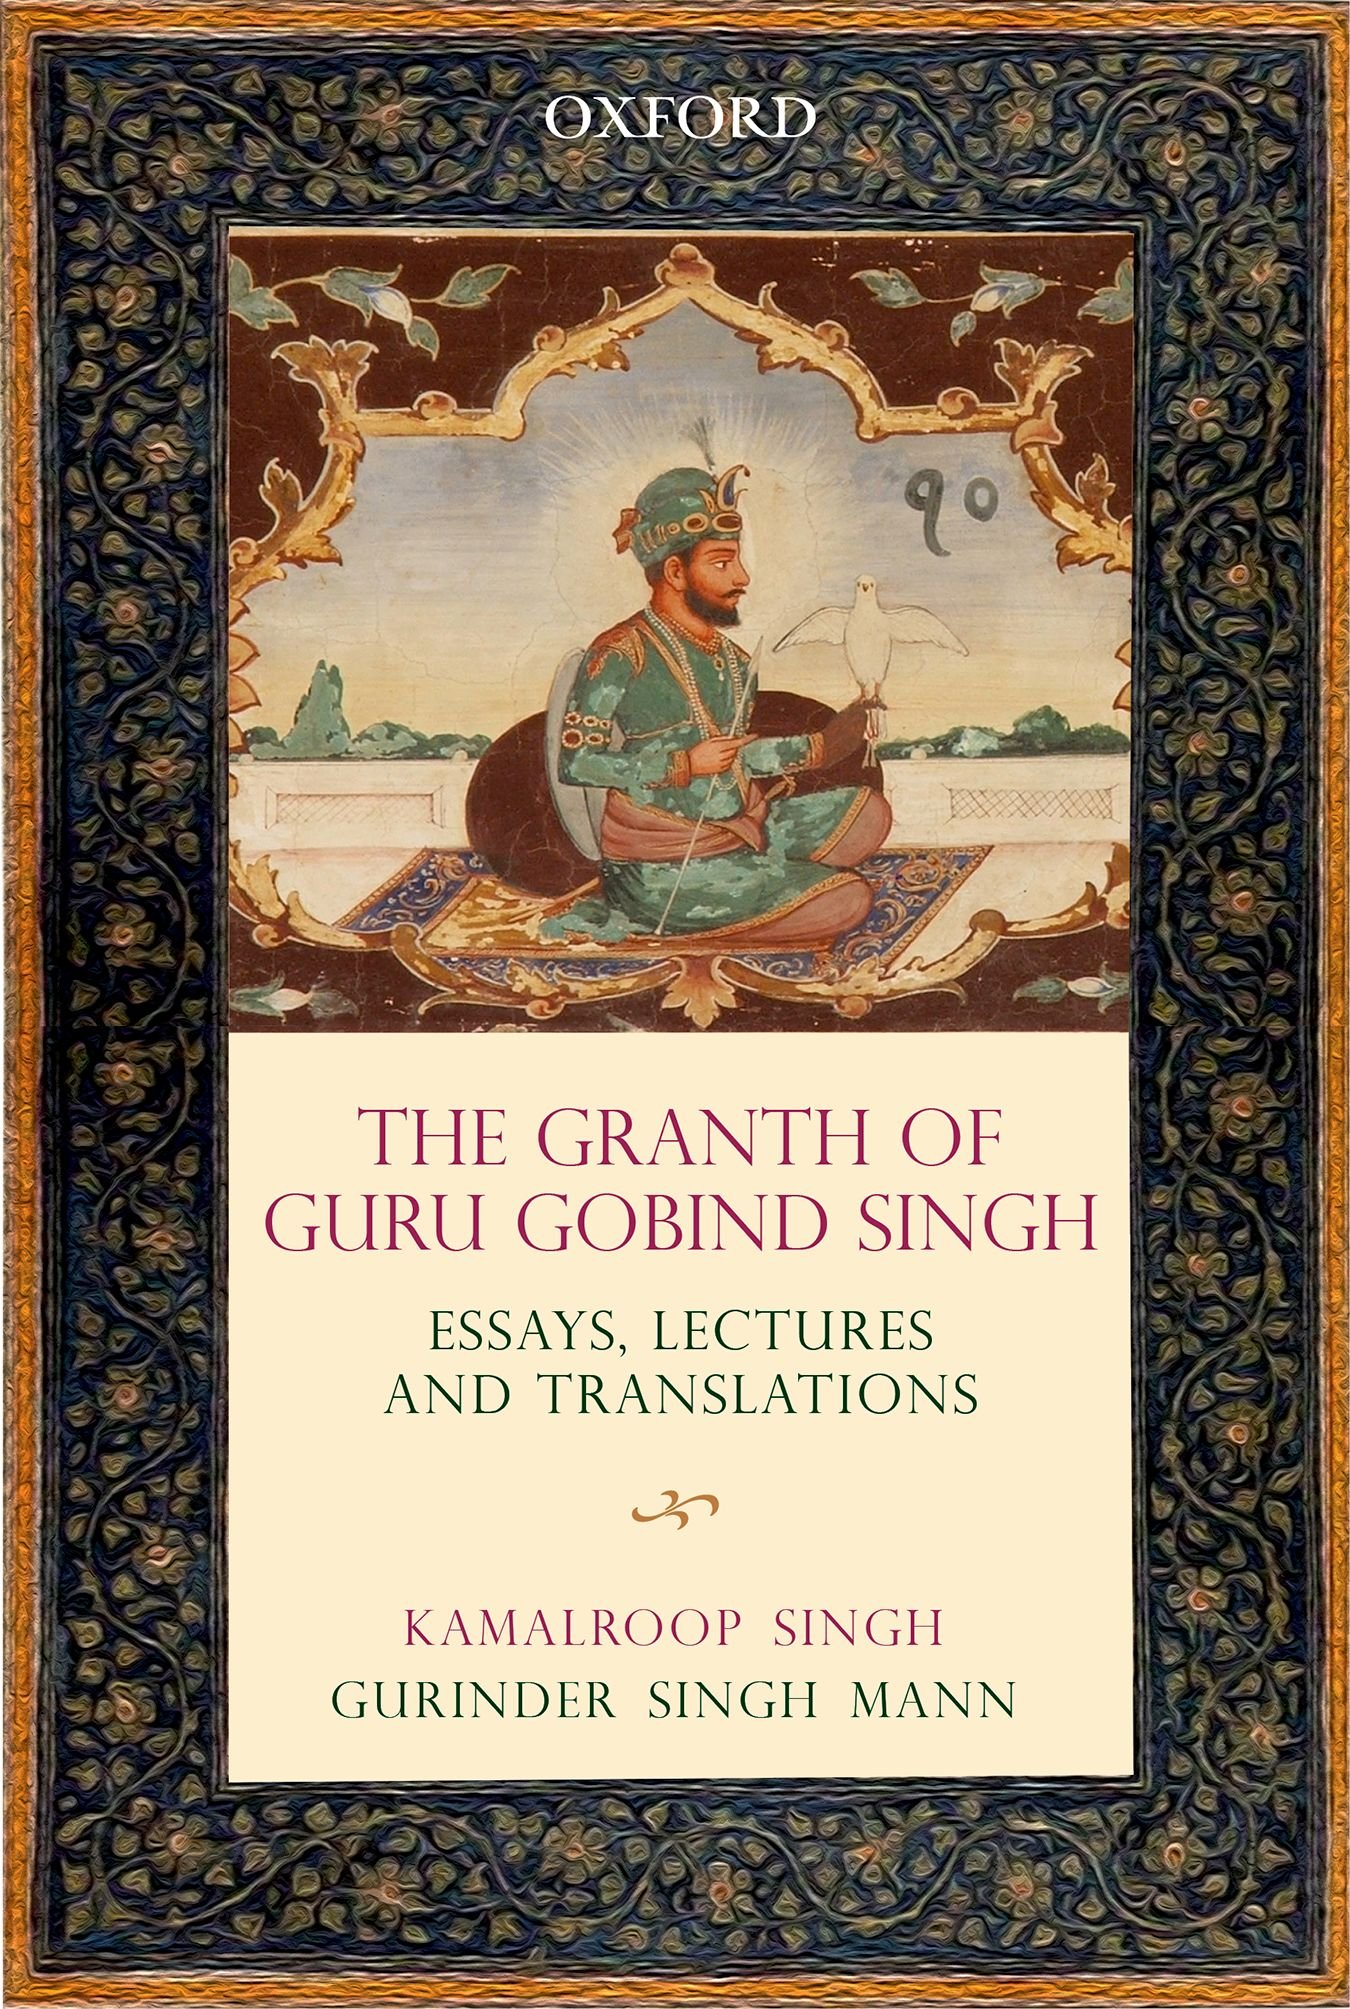 The Granth of Guru Gobind Singh